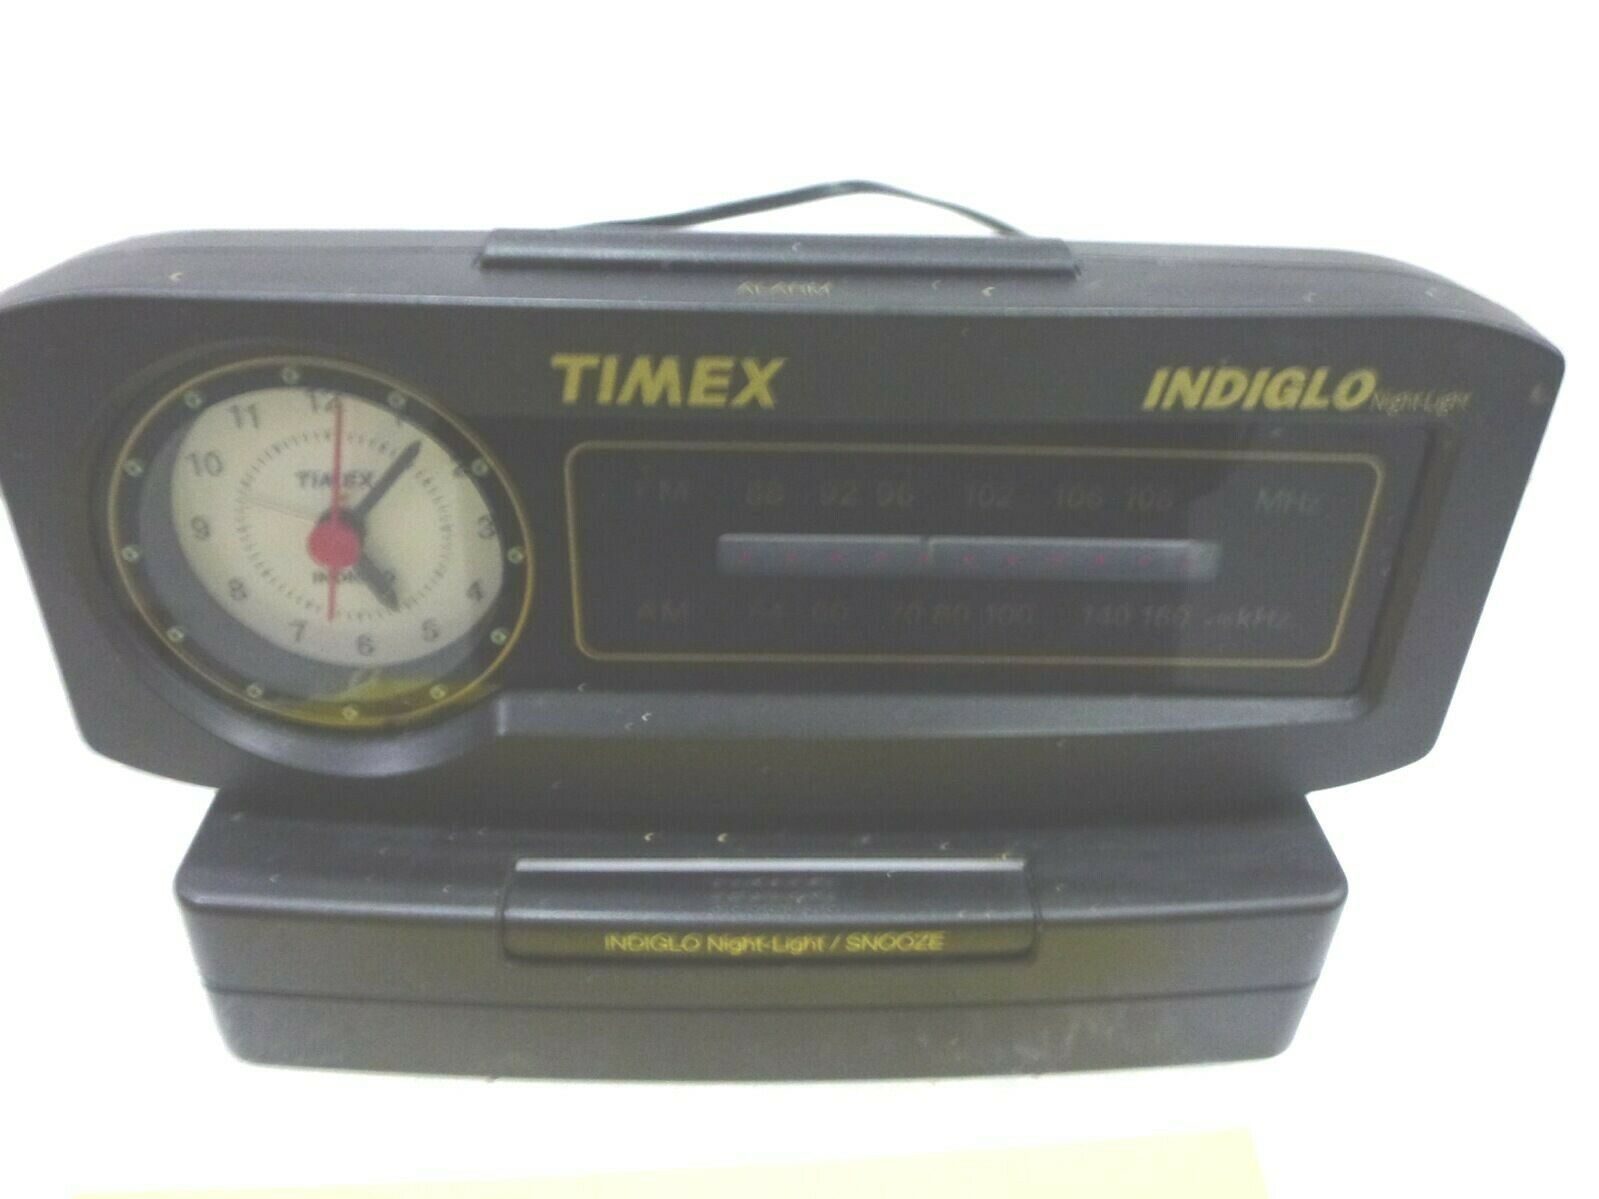 TIMEX Am/Fm Alarm Clock Radio Indiglo Night Light - $49.00